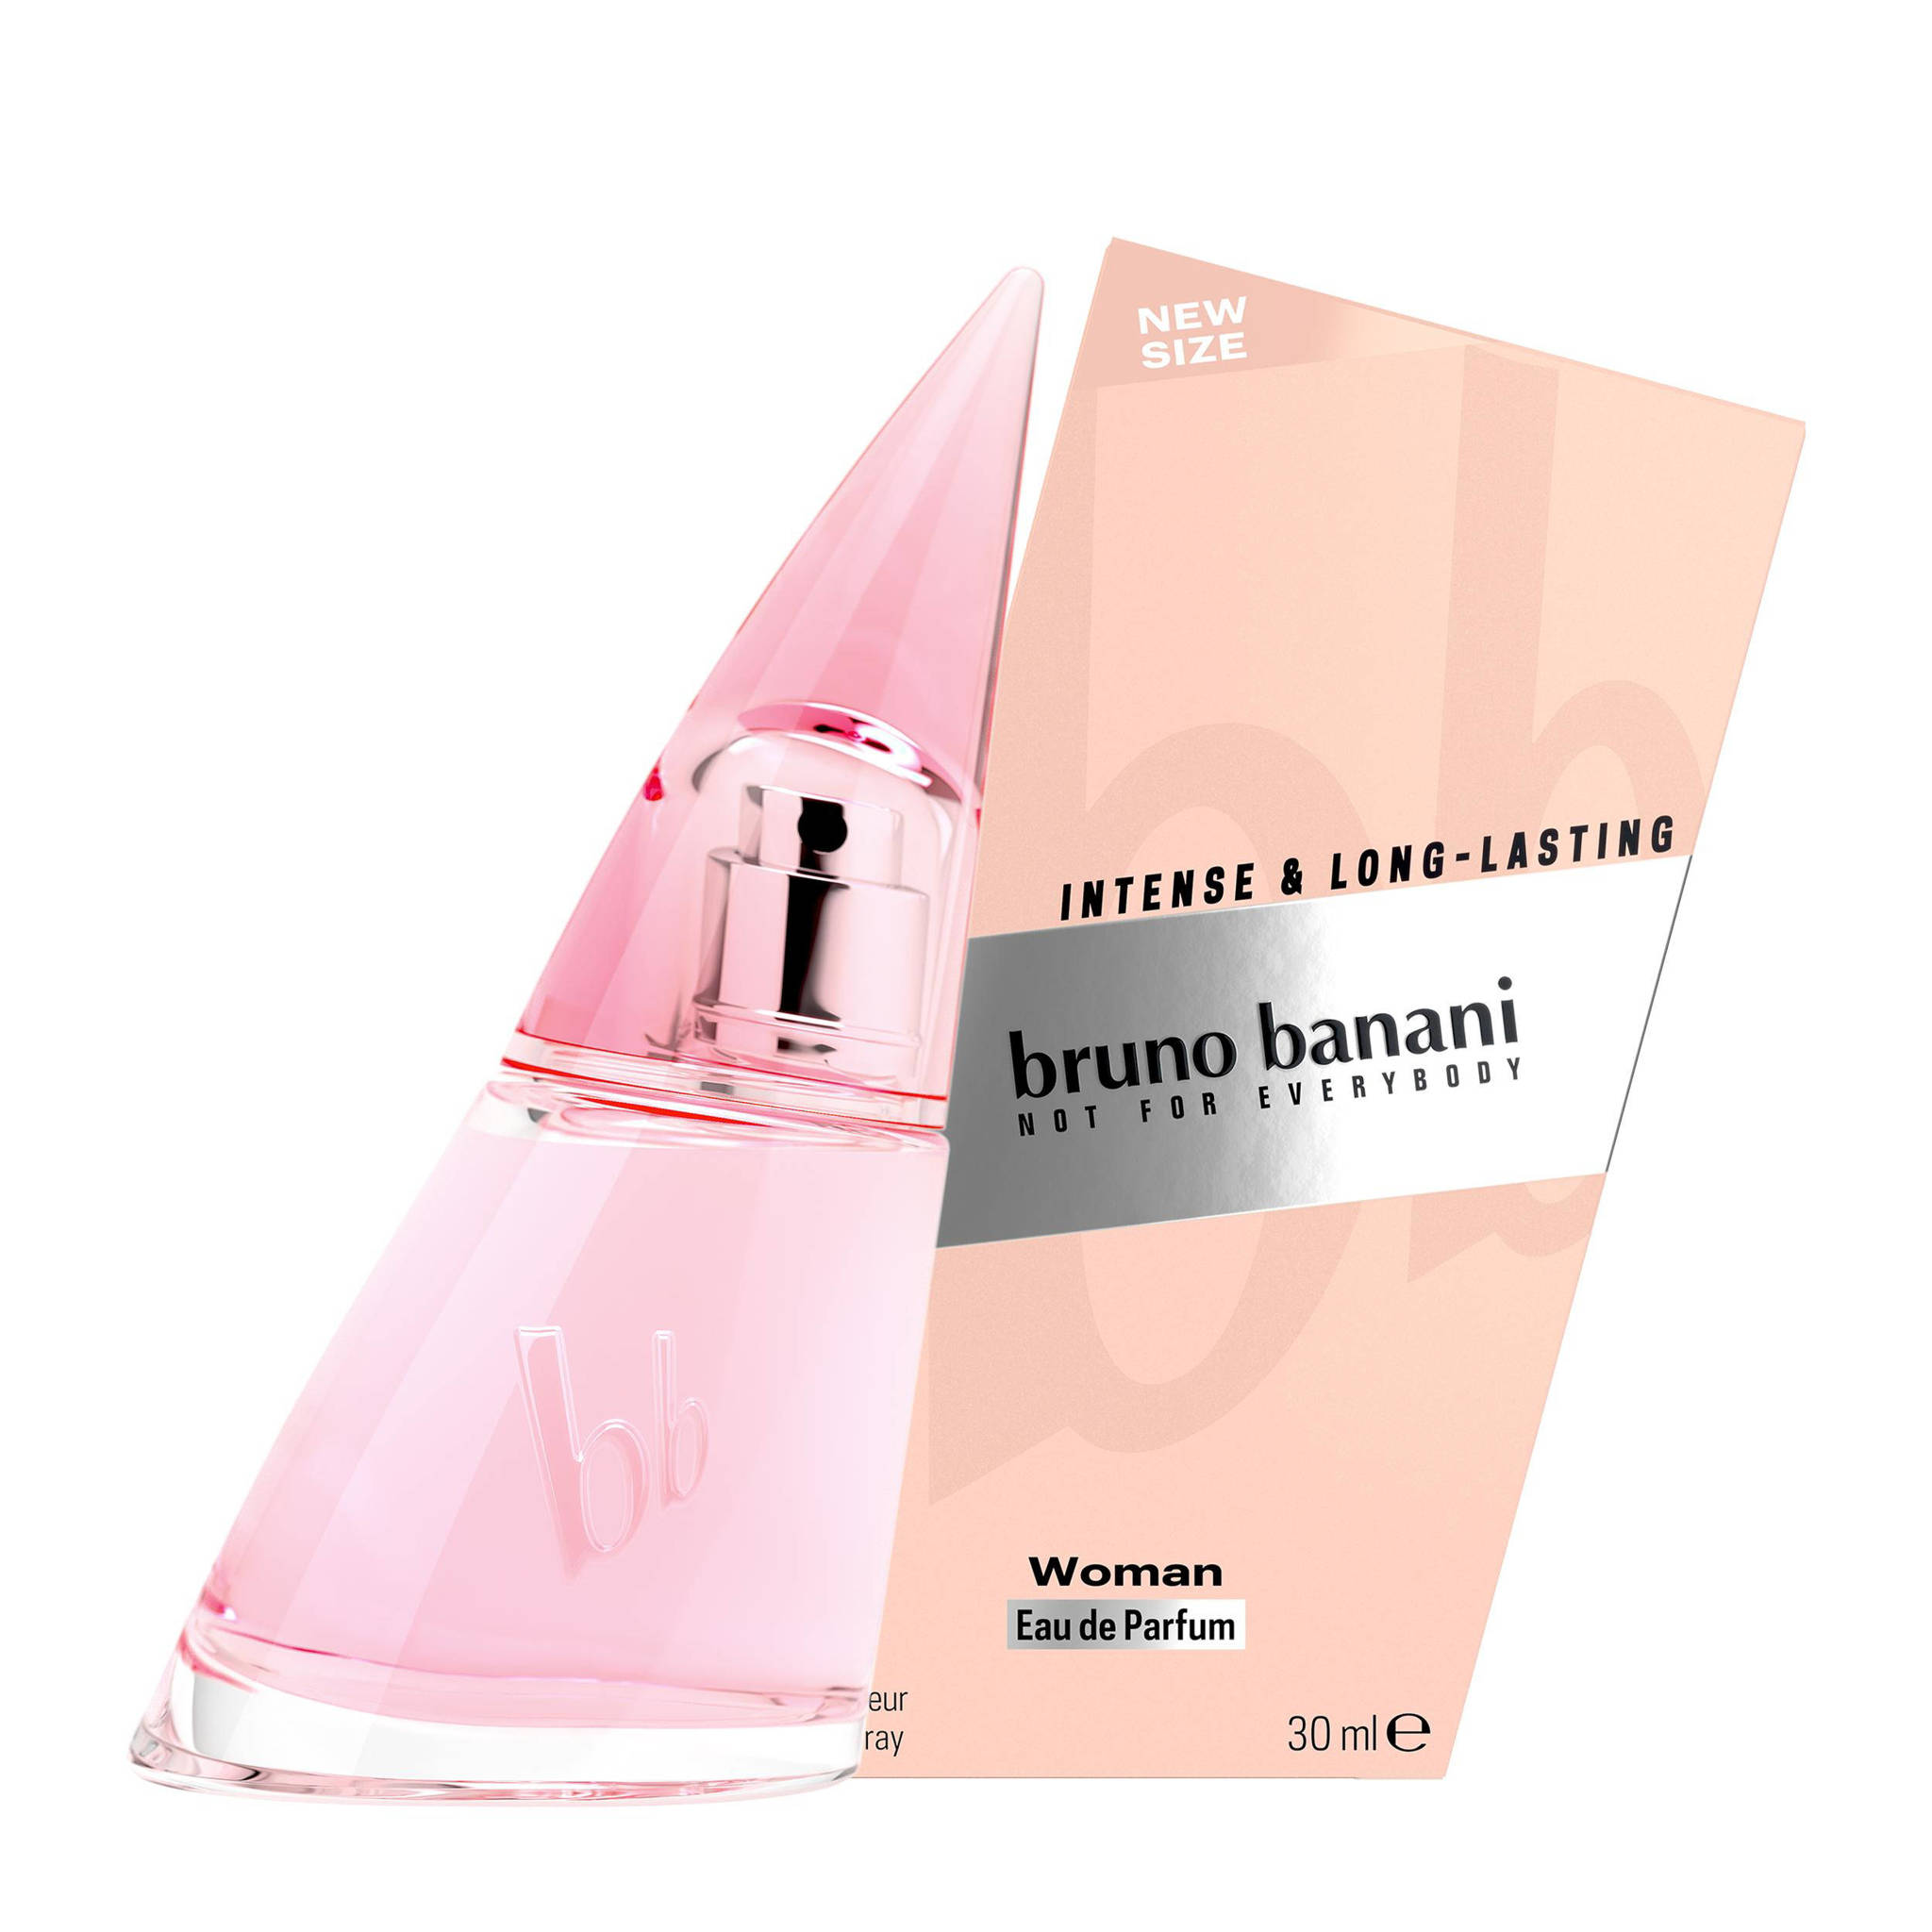 Woman eau de parfum ml | wehkamp